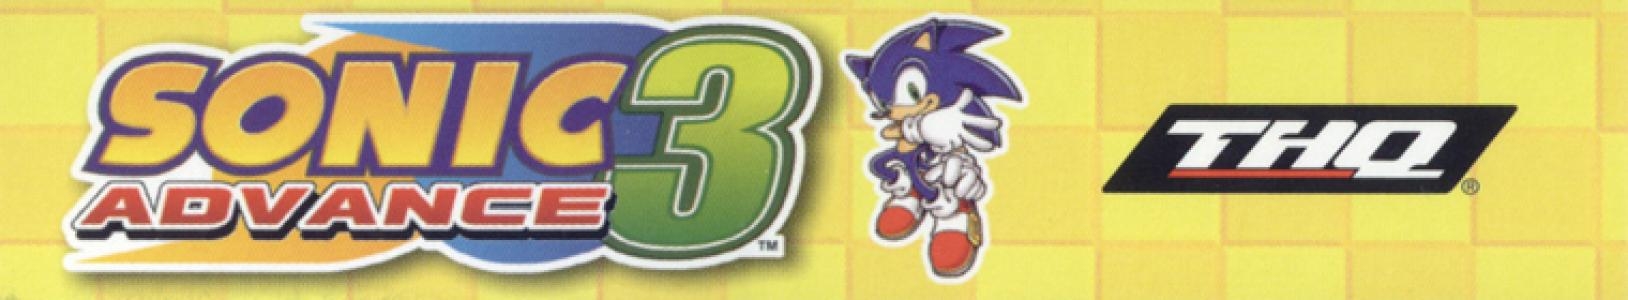 Sonic Advance 3 banner